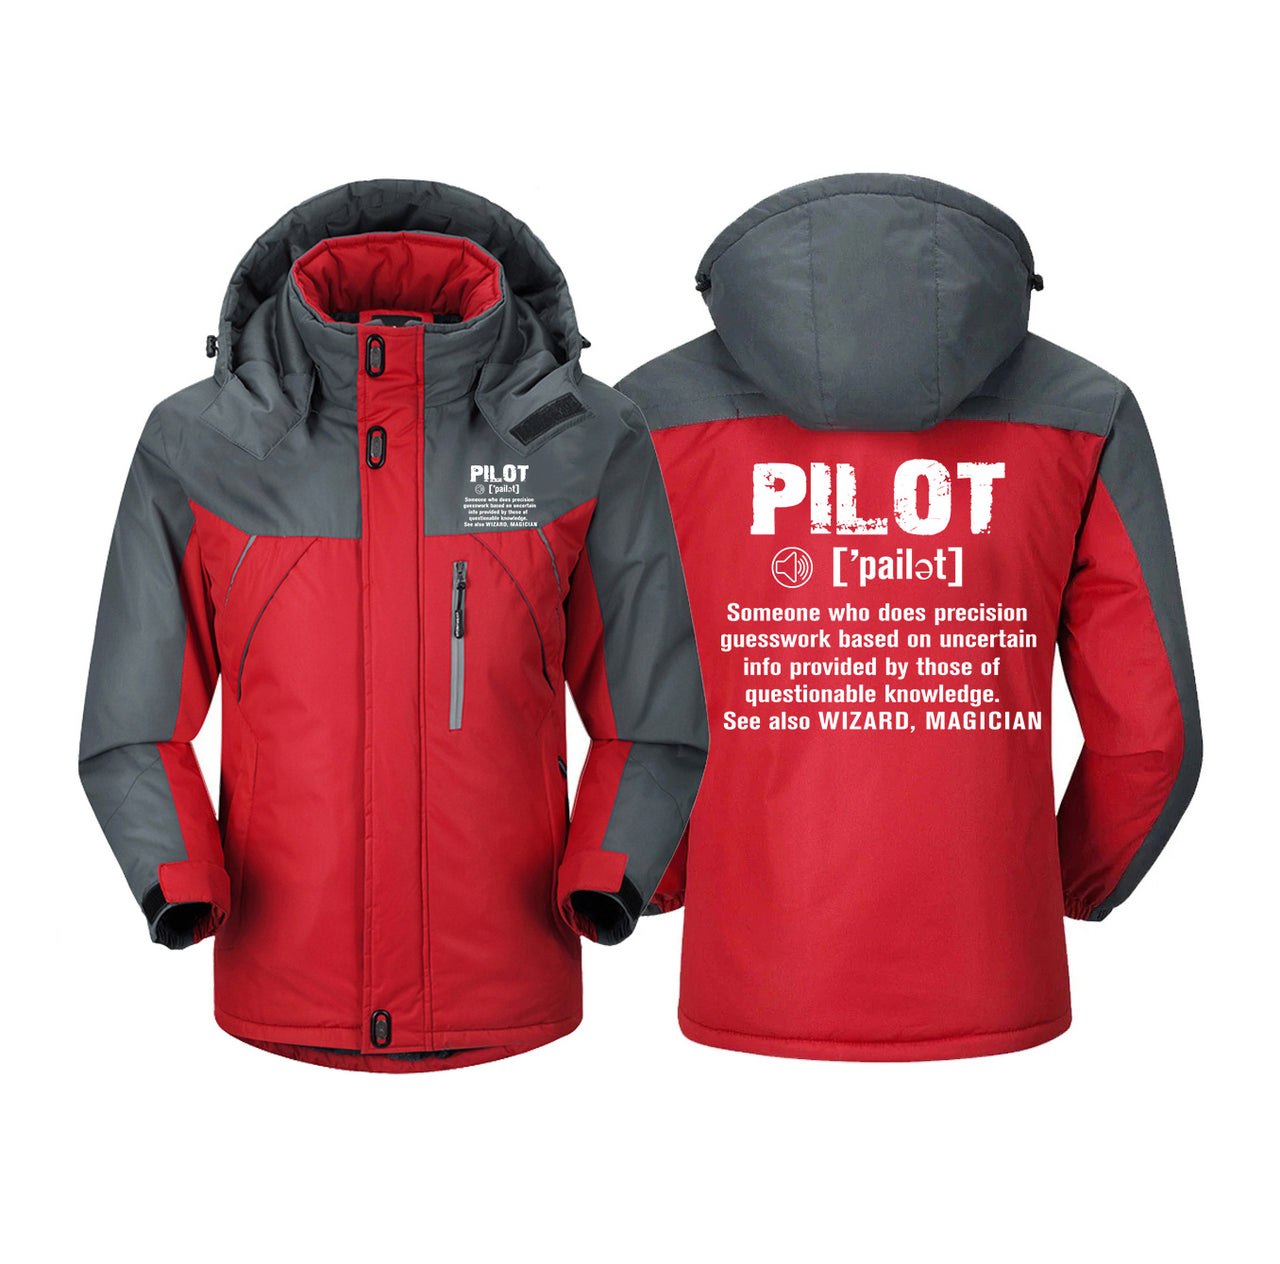 Pilot [Noun] Designed Thick Winter Jackets